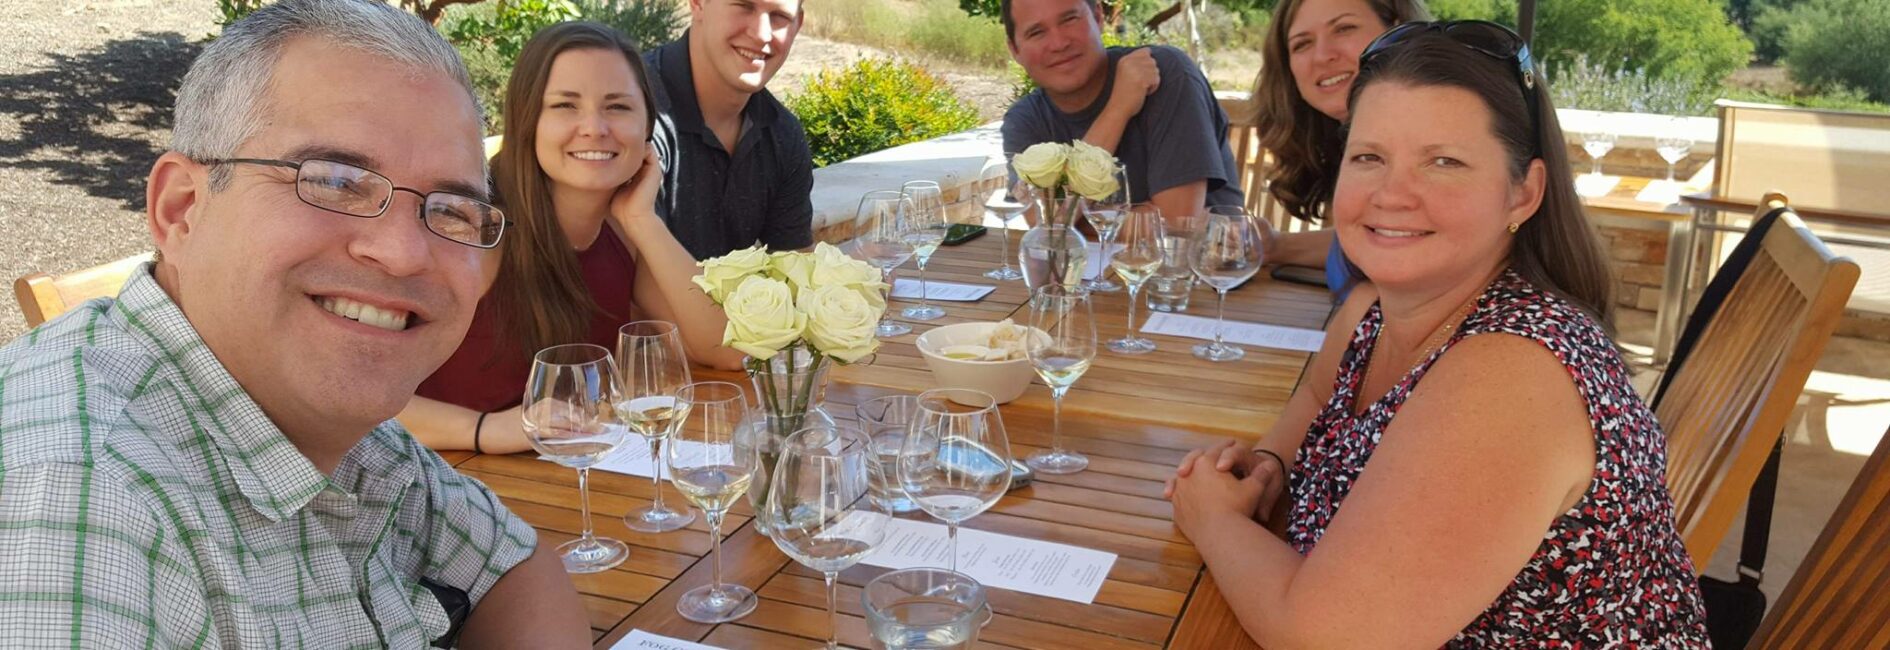 Happy people wine tasting around a table